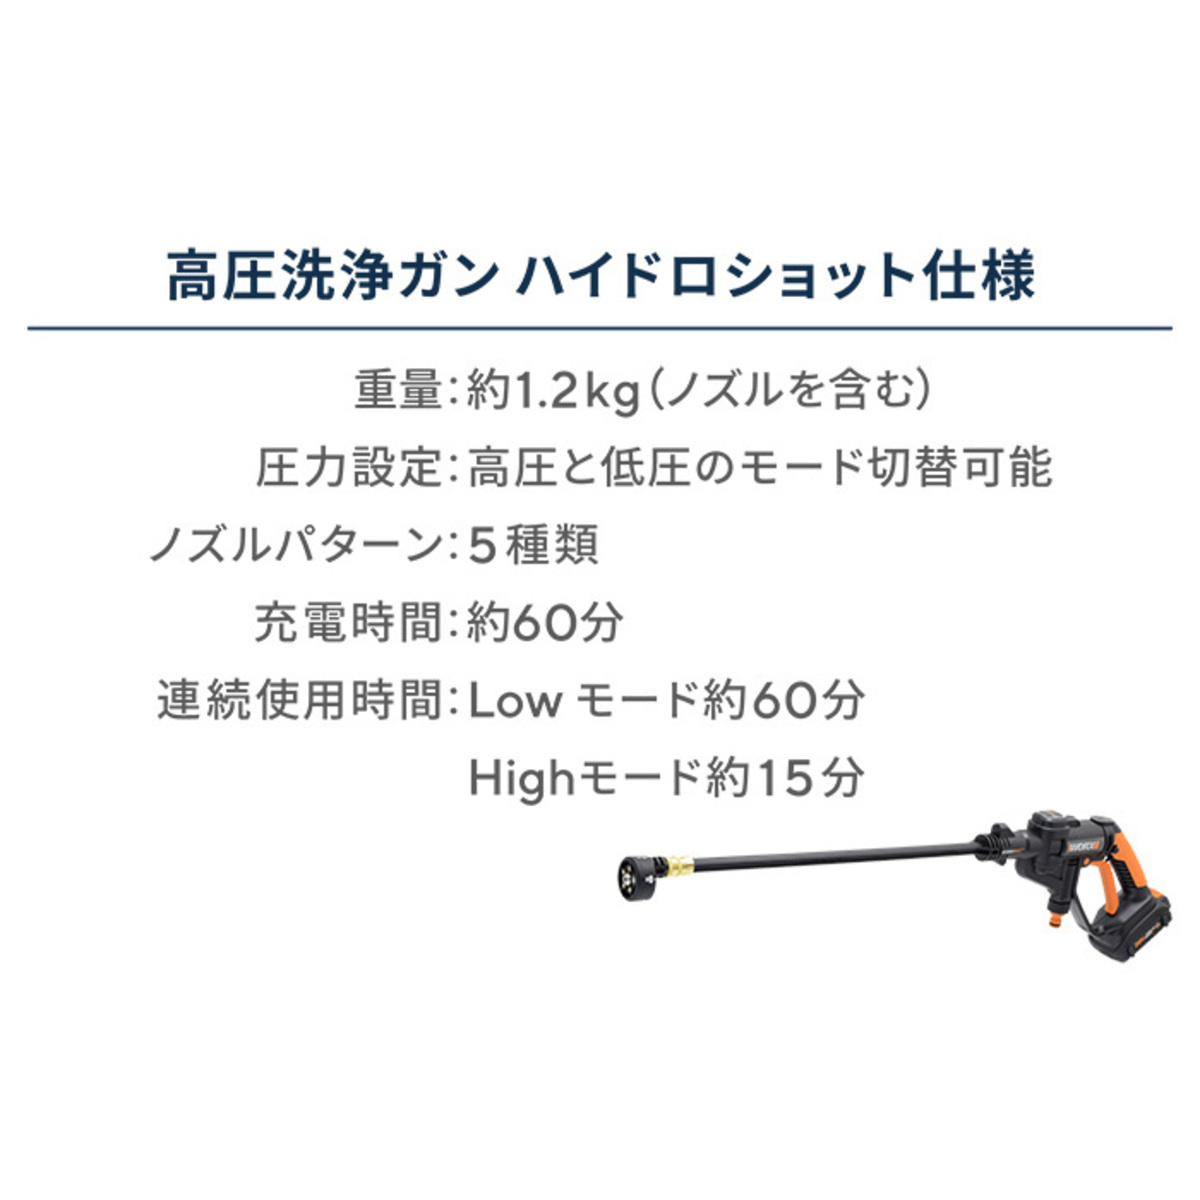 WORX充電式高圧洗浄ガンハイドロショットダスター+バケツ - QVC.jp